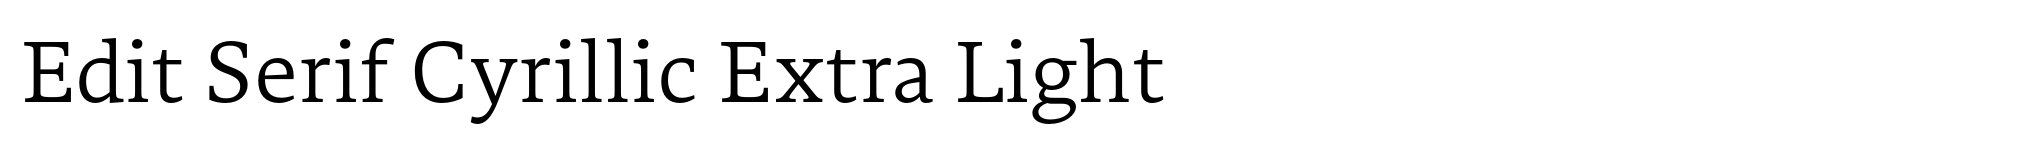 Edit Serif Cyrillic Extra Light image